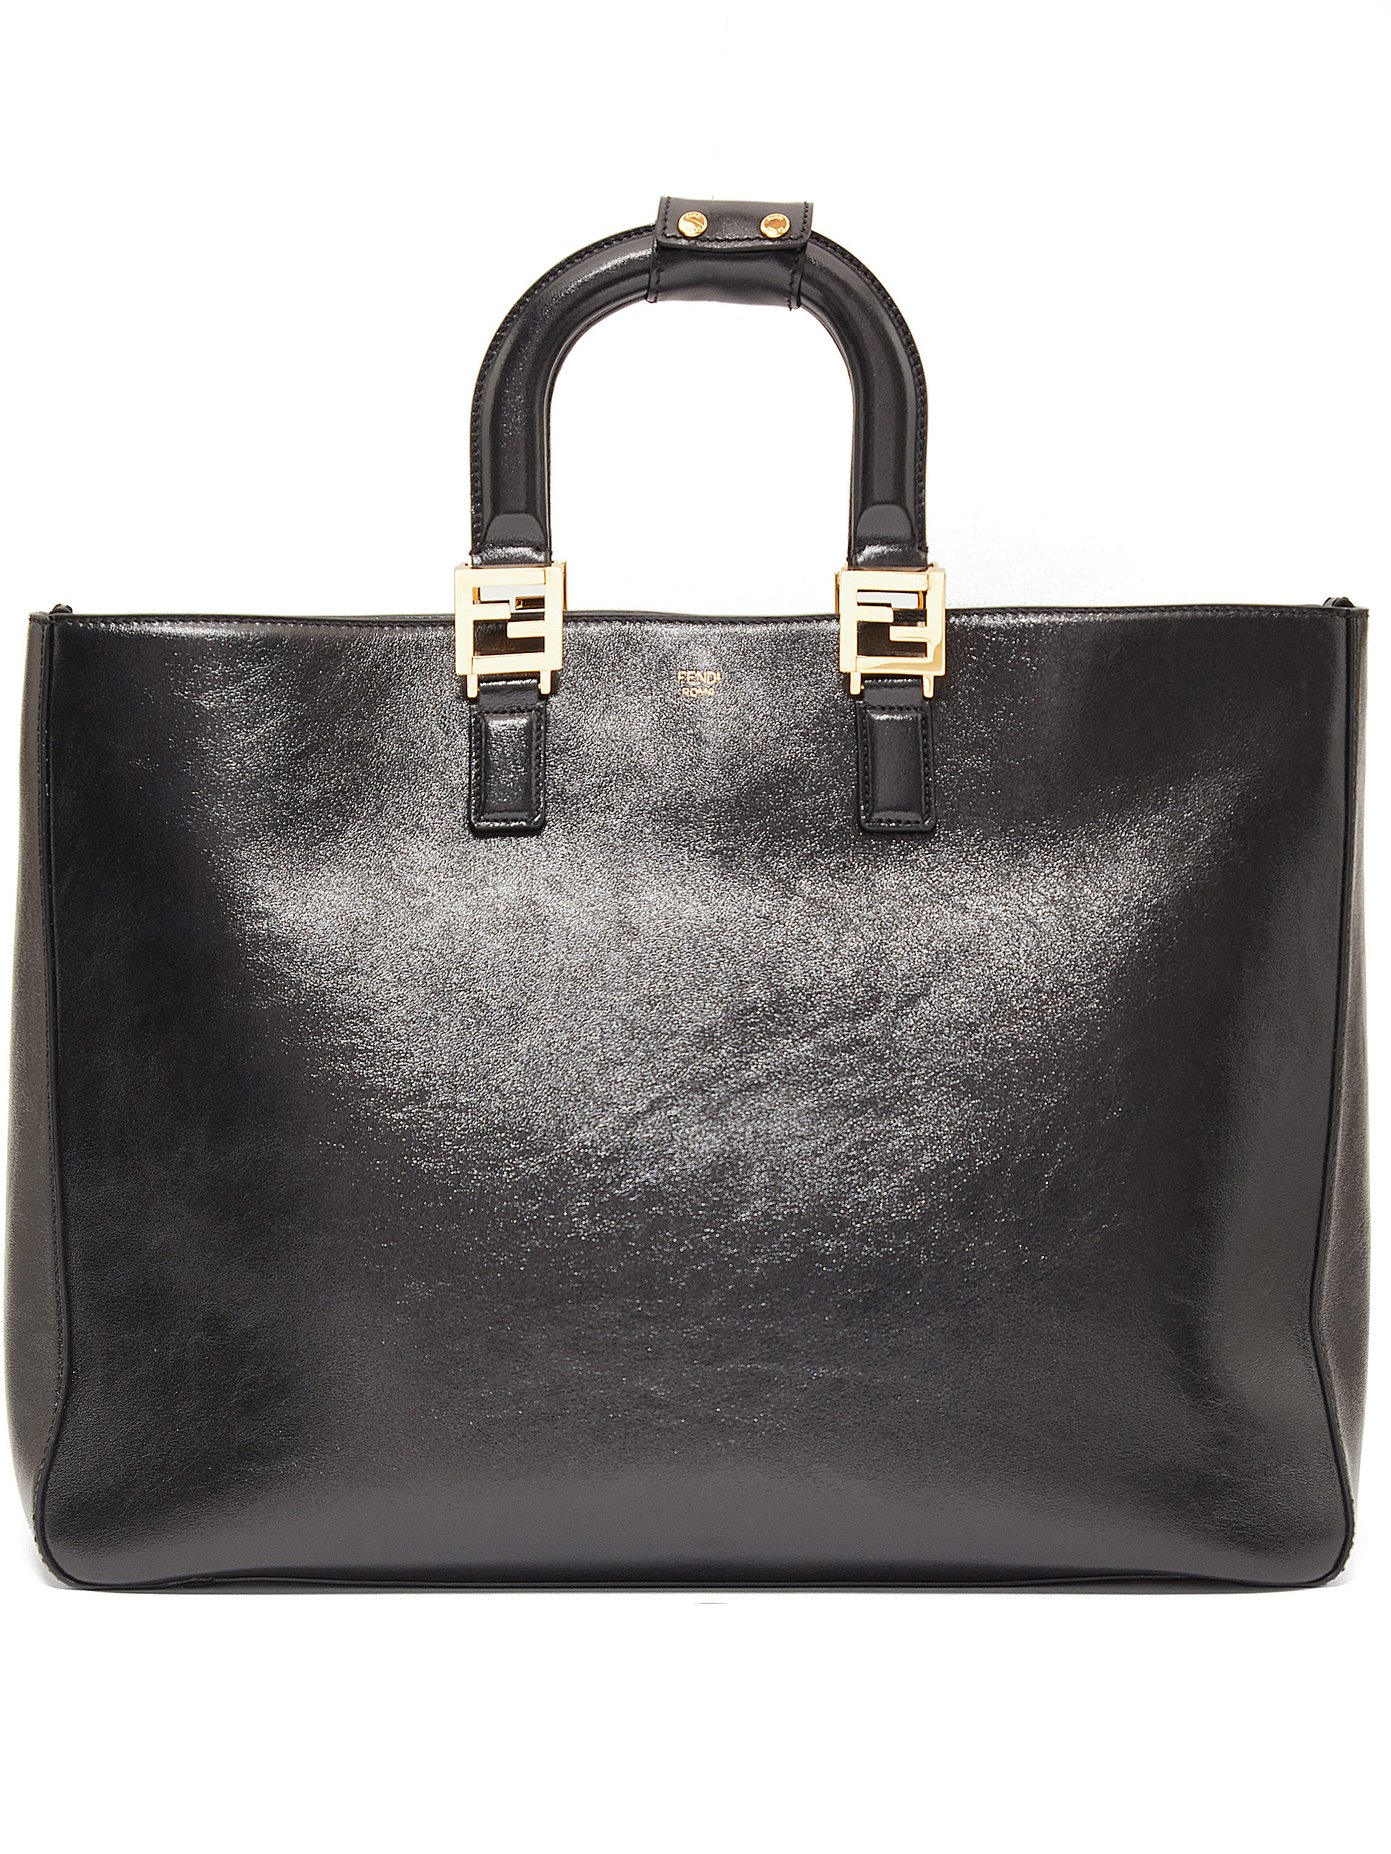 Fendi Leather Bag Flash Sales, 56% OFF | www.rupit.com